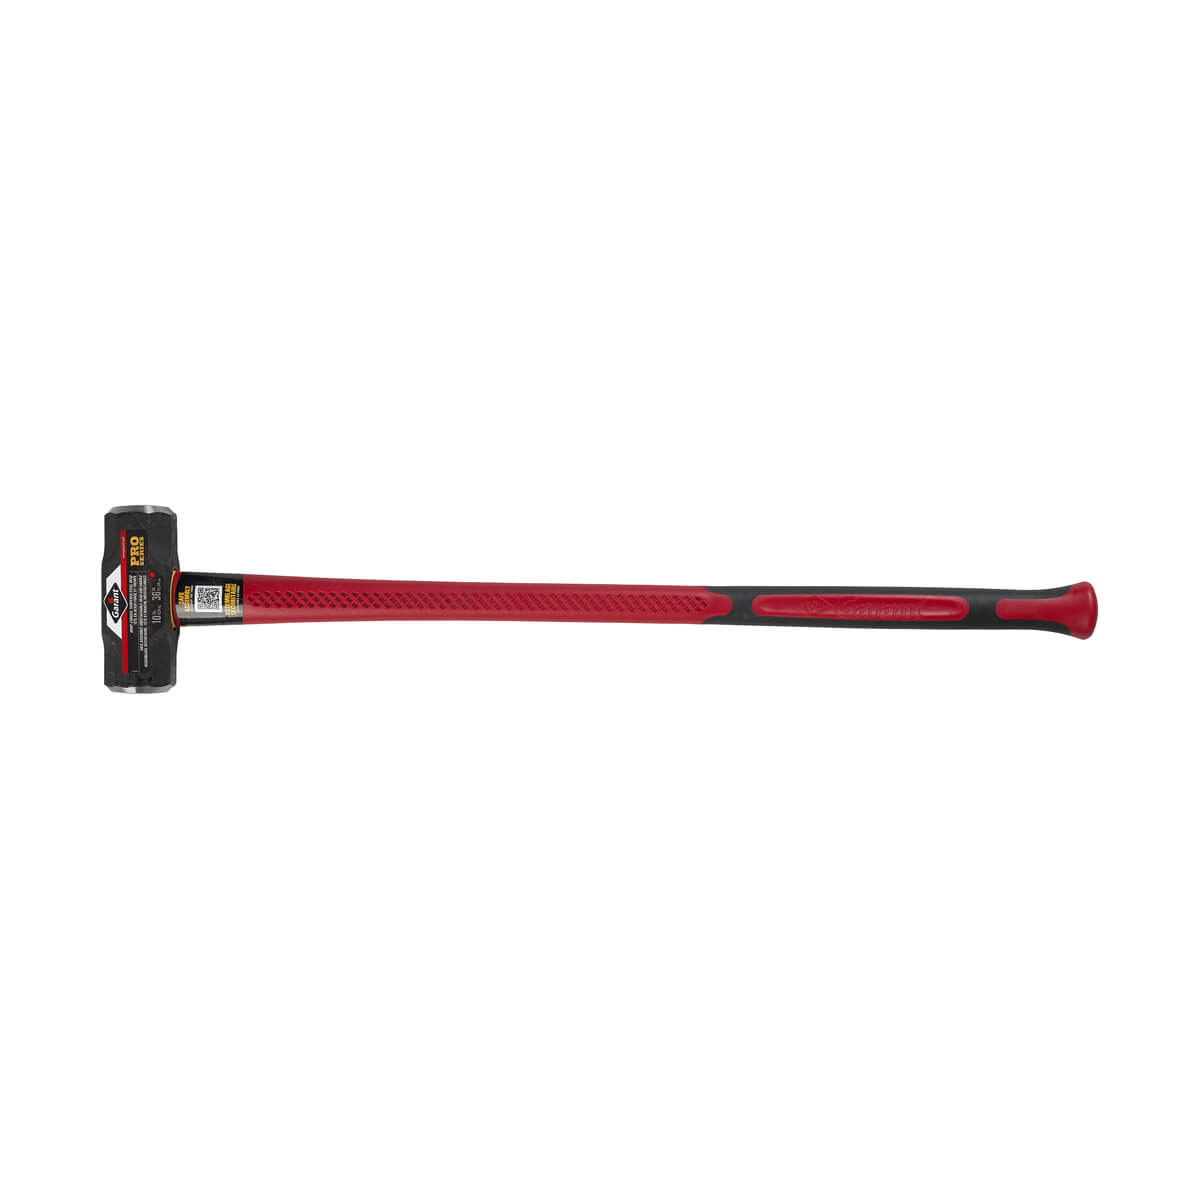 10 lb Sledge Hammer with Fiberglass Handle